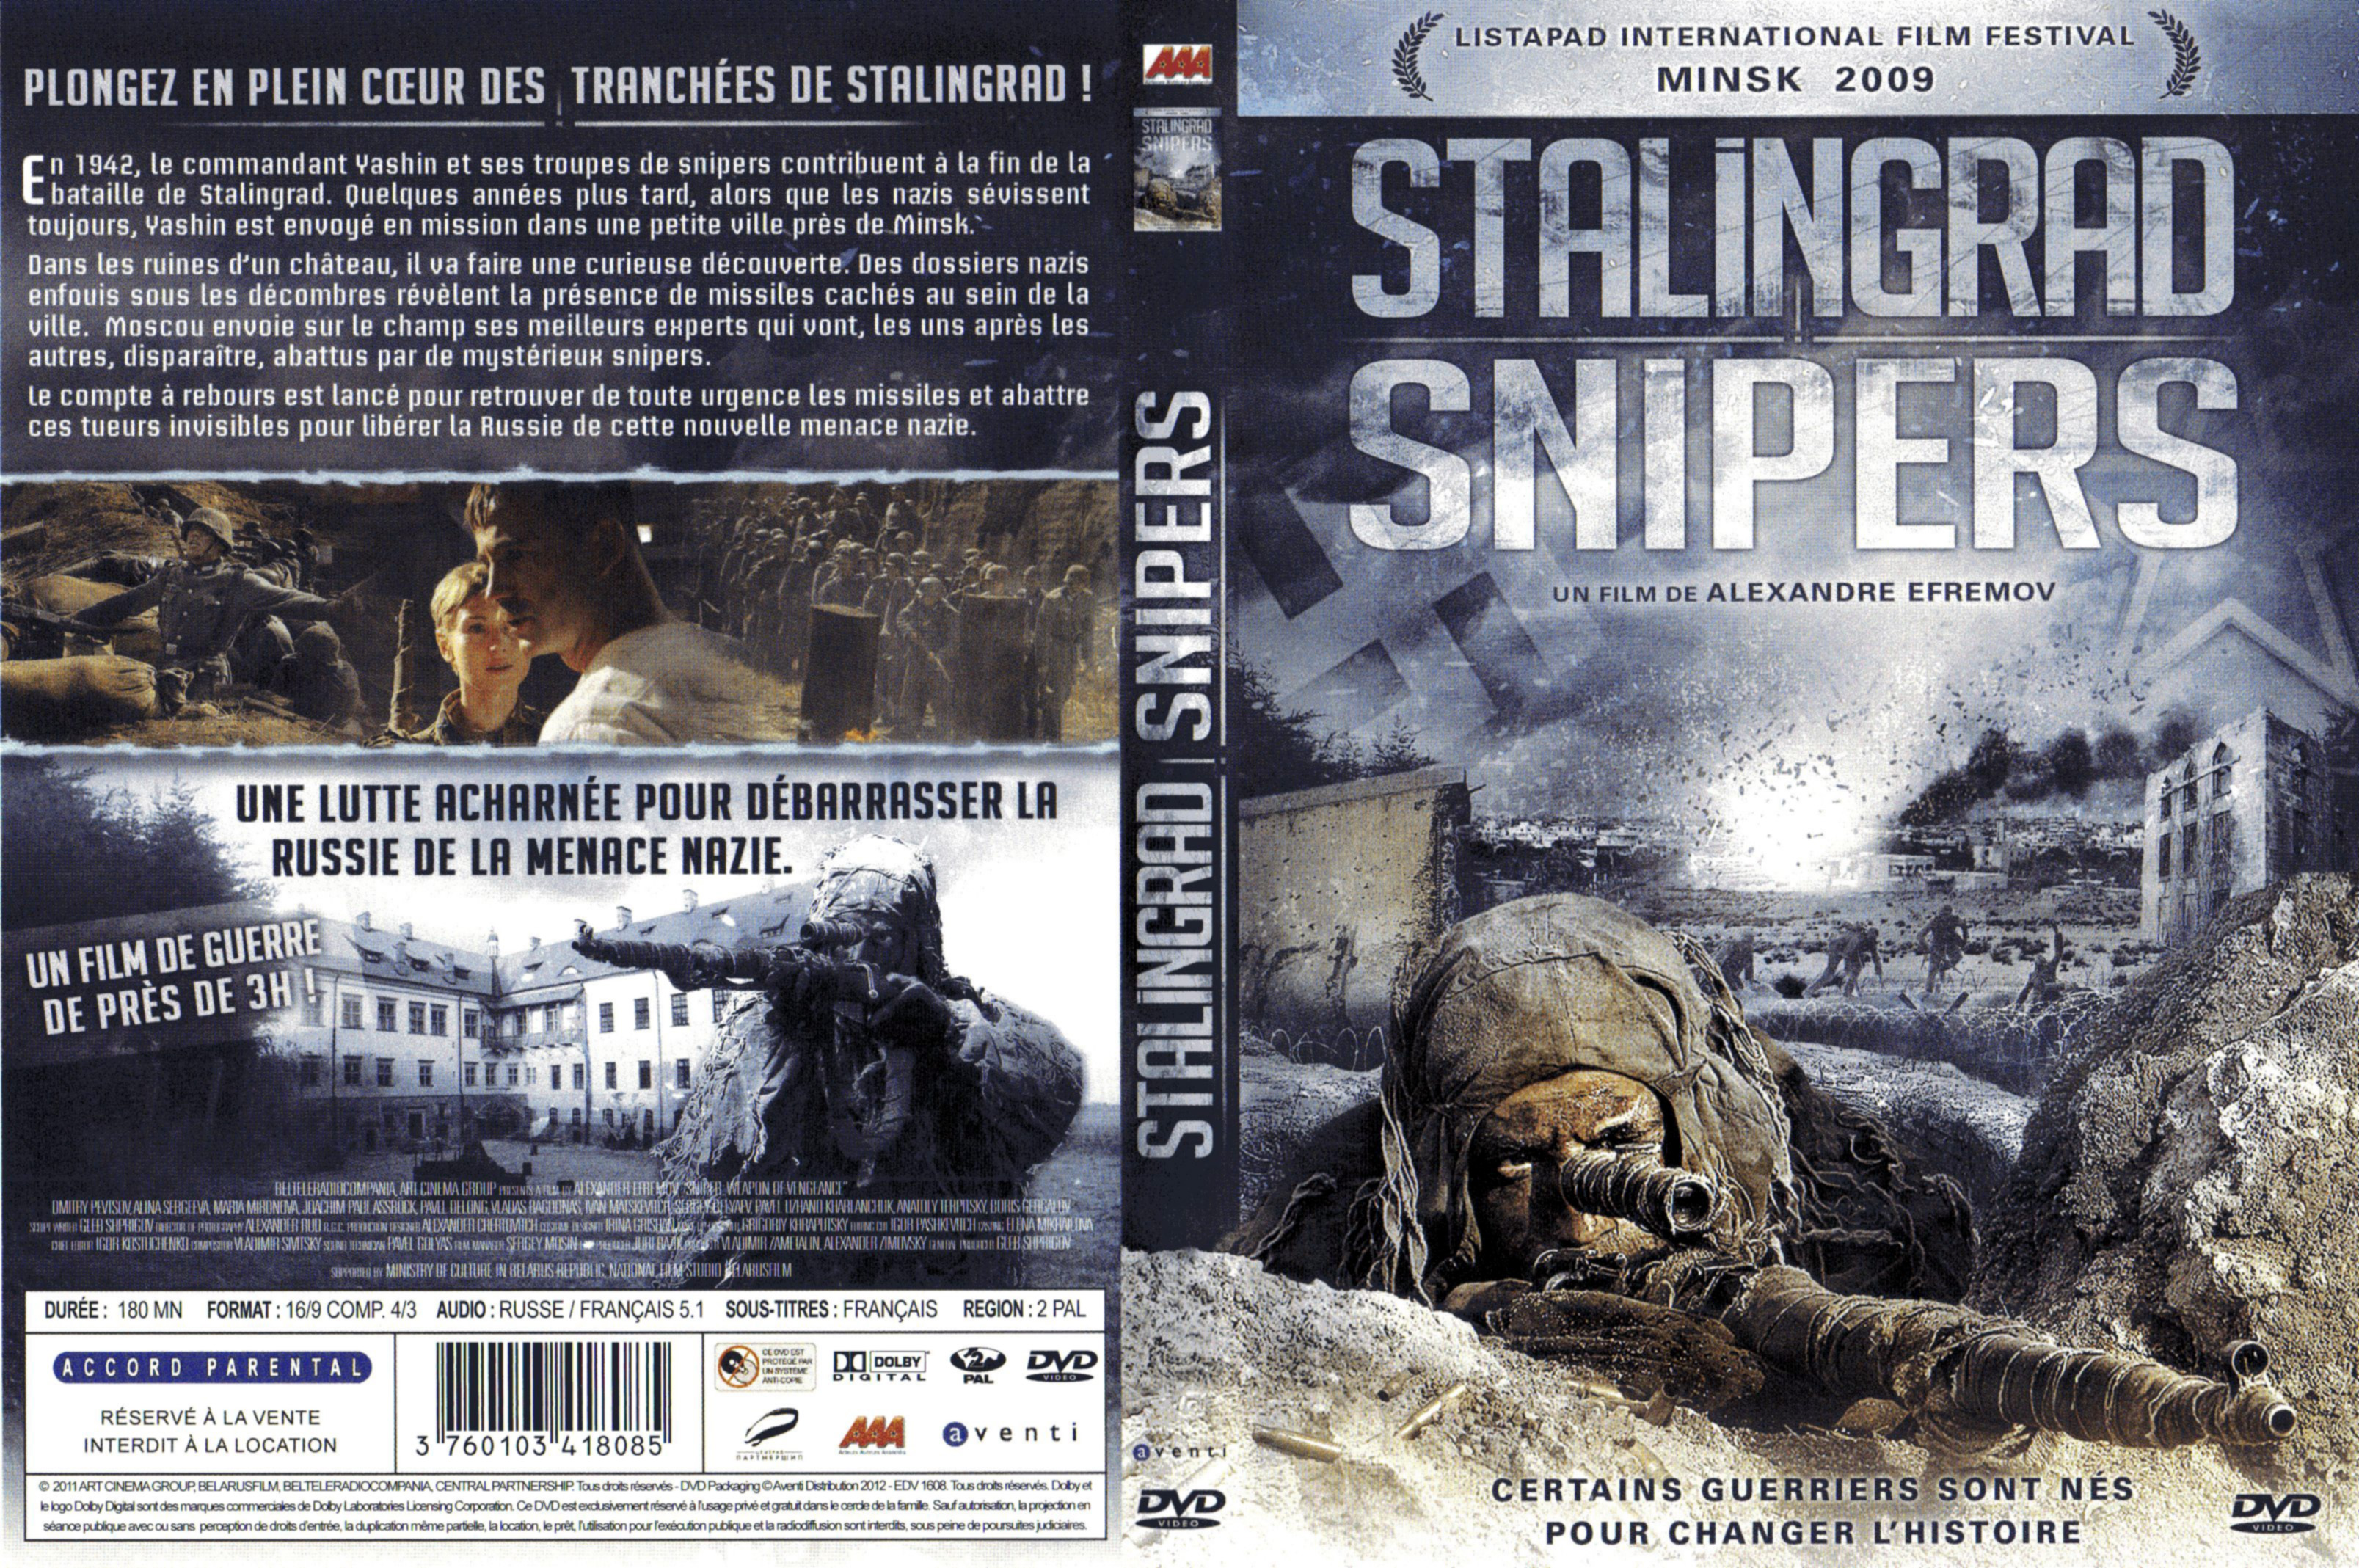 Jaquette DVD Stalingrad Snipers